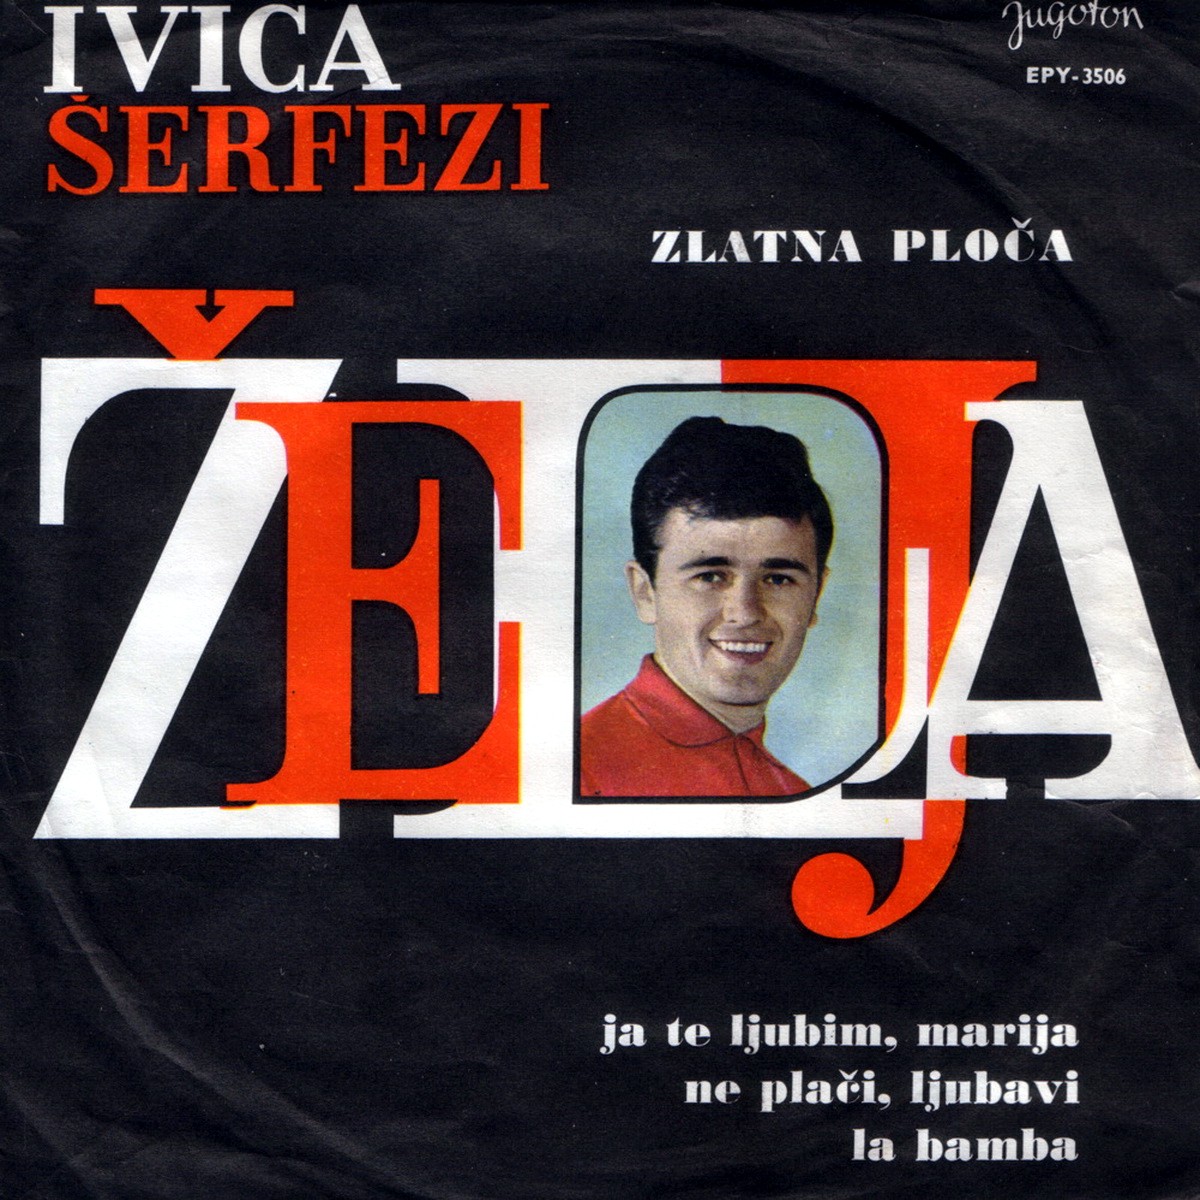 Ivica Serfezi 1965 Zelja a